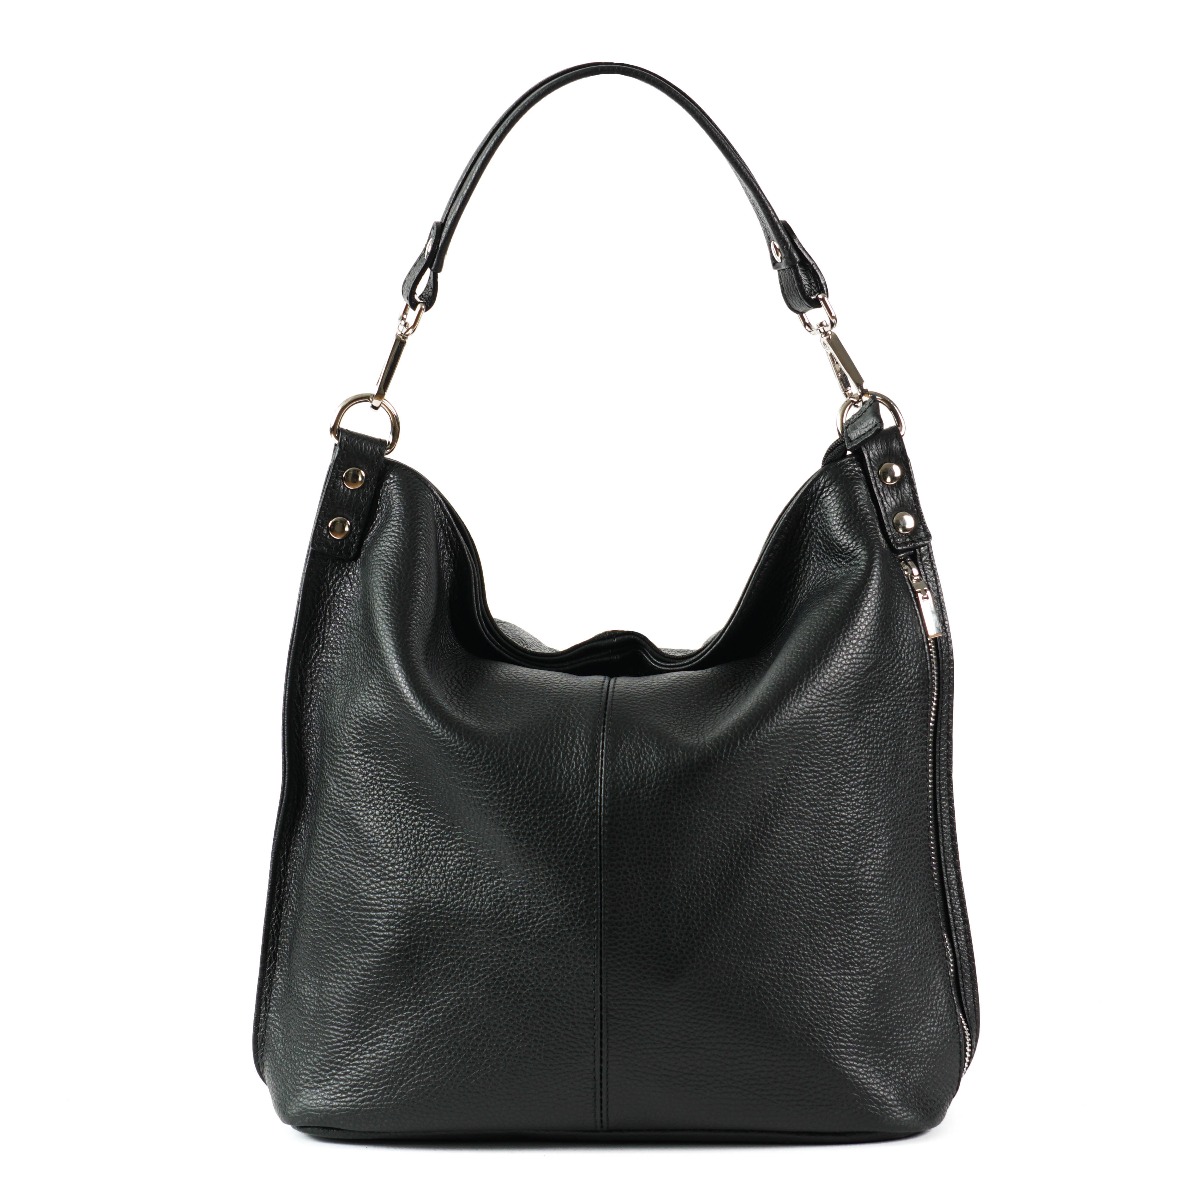 Black hobo bag - medium size